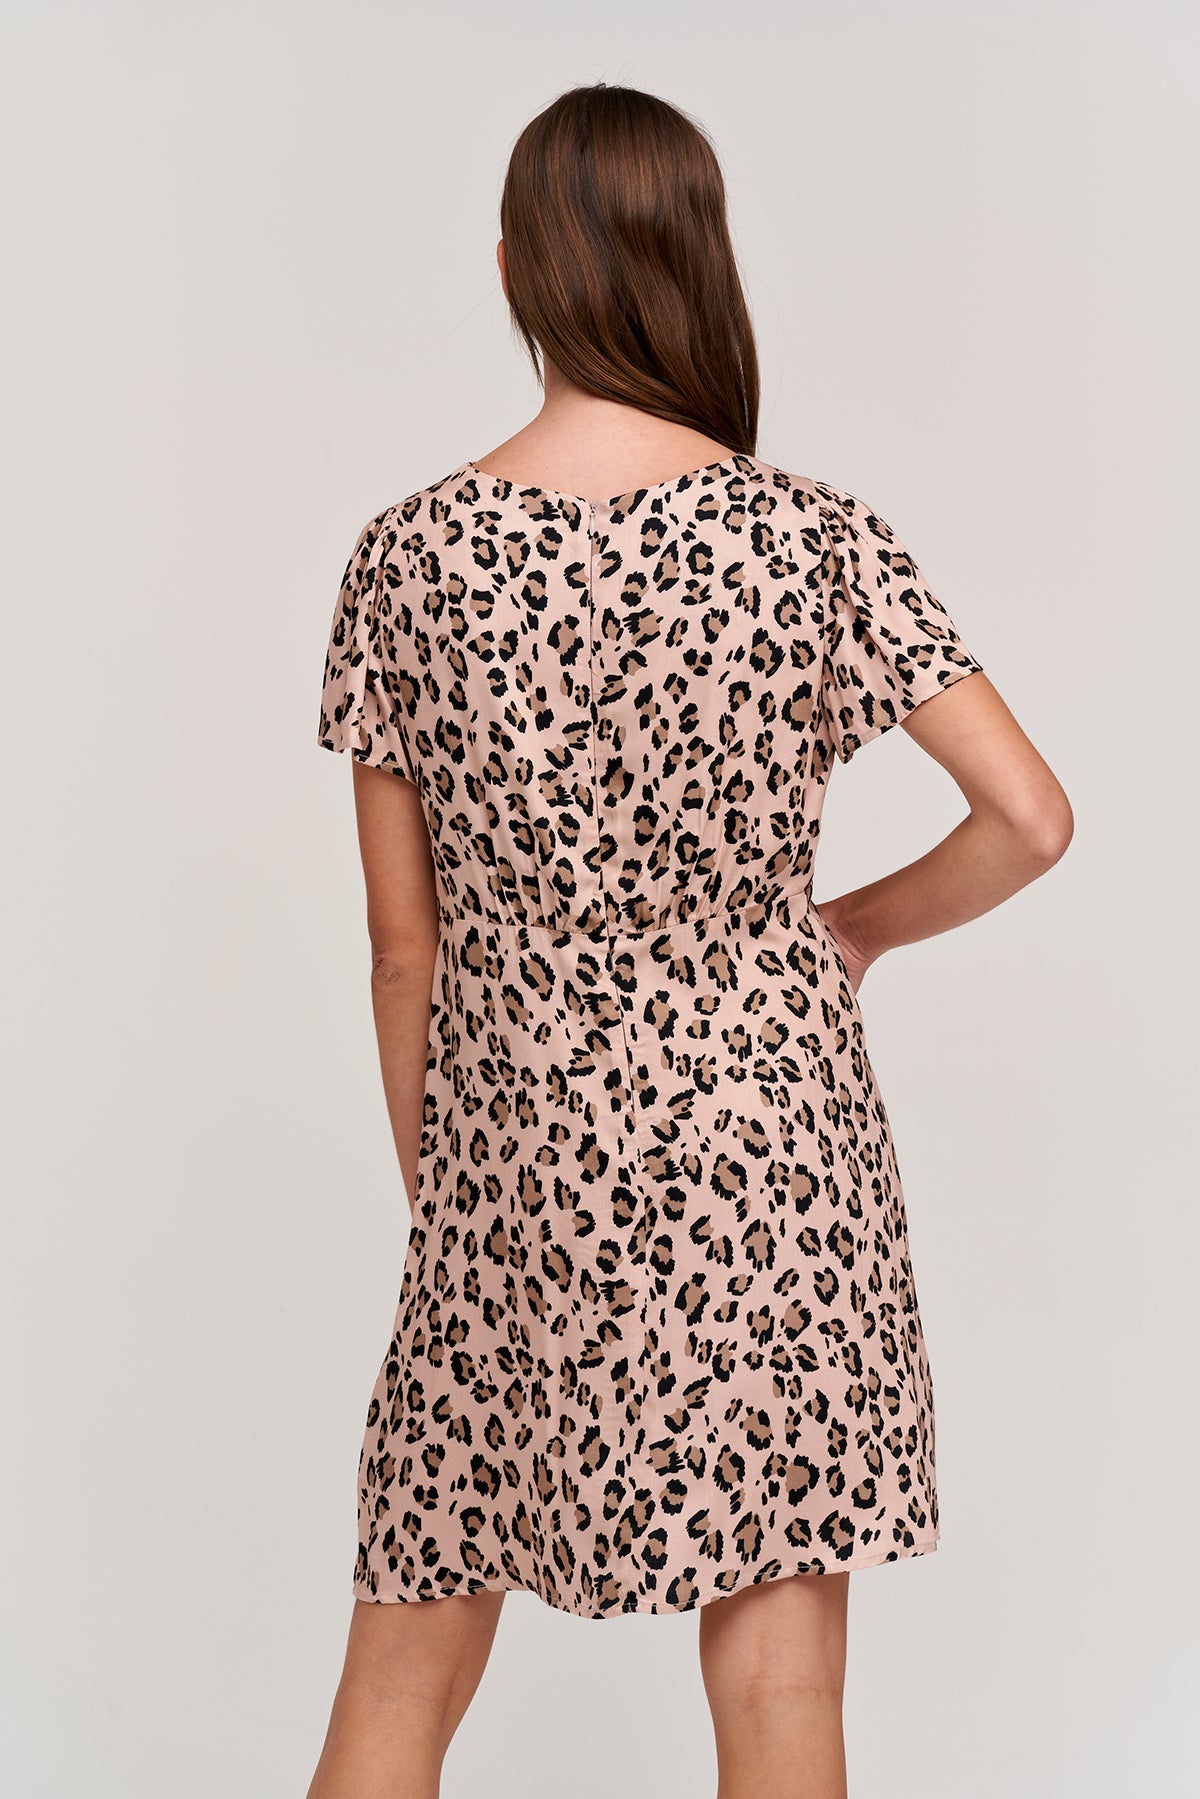 Drew Cheetah Print Dress in blush back-25052881420481